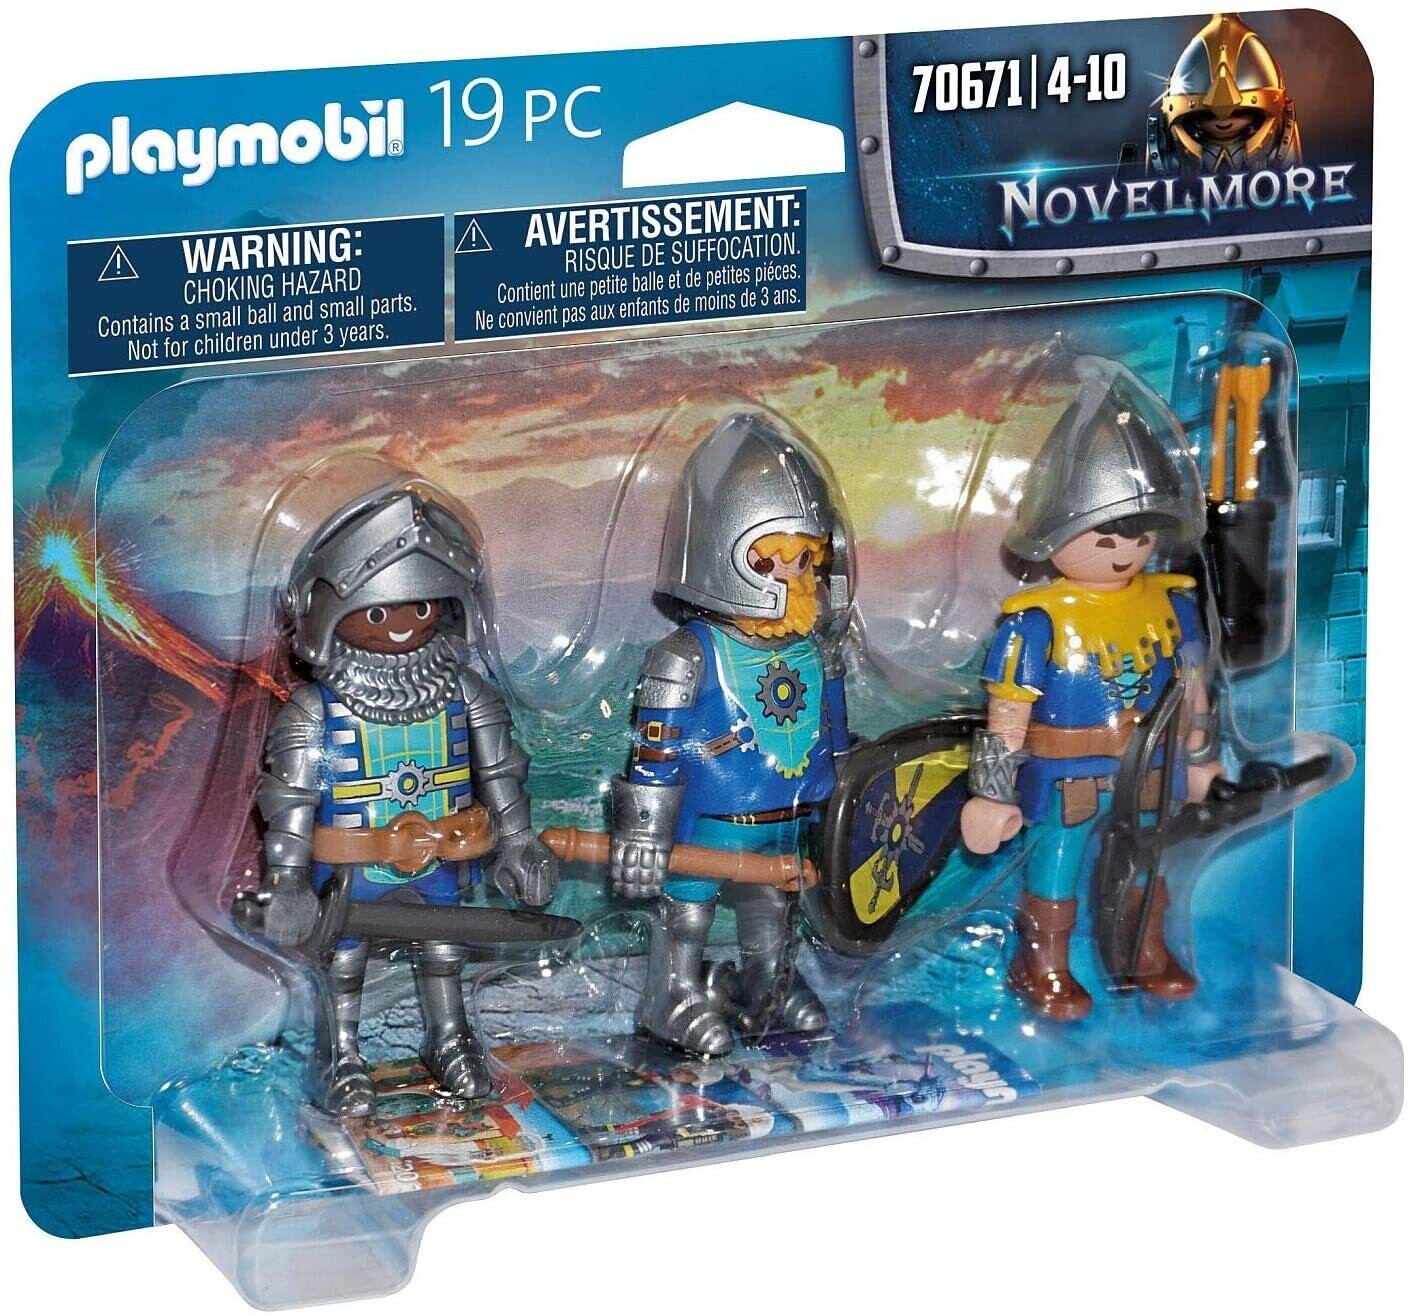 Playmobil 70671 Novelmore Knights Set